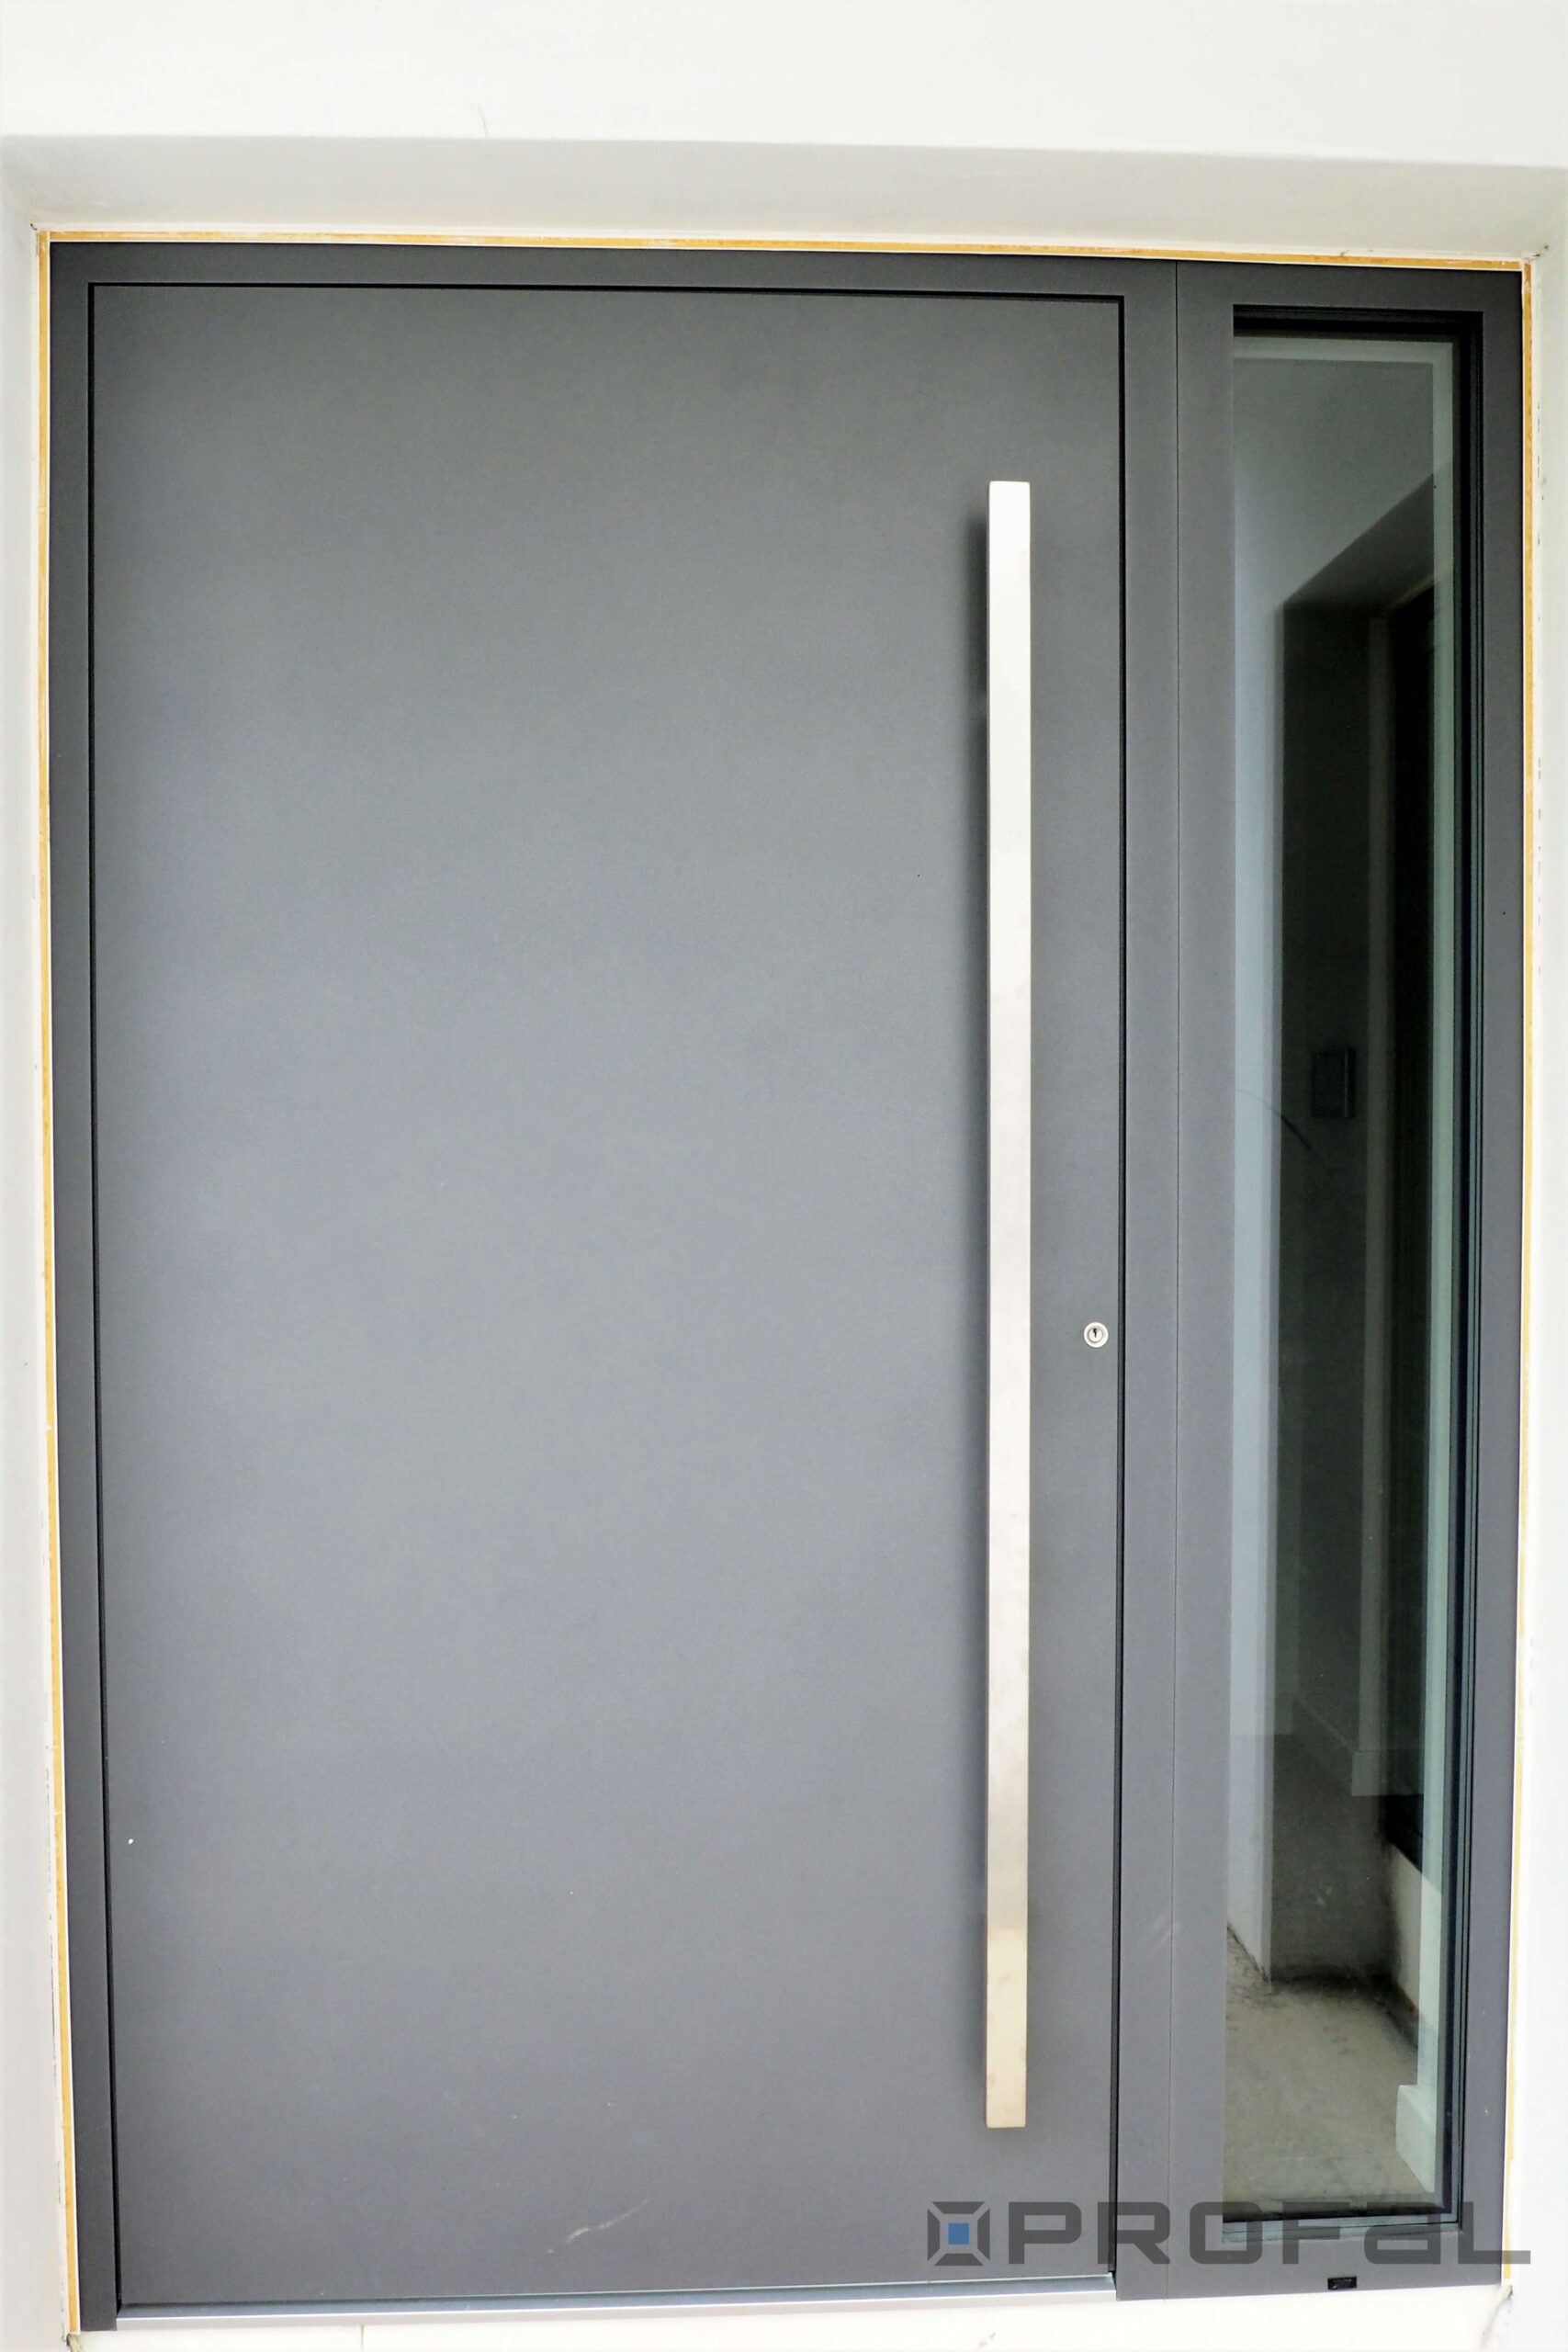 DECALU-PANEL-DOOR- Aluminium windows and doors manufacturer UK - Profal Aluminium